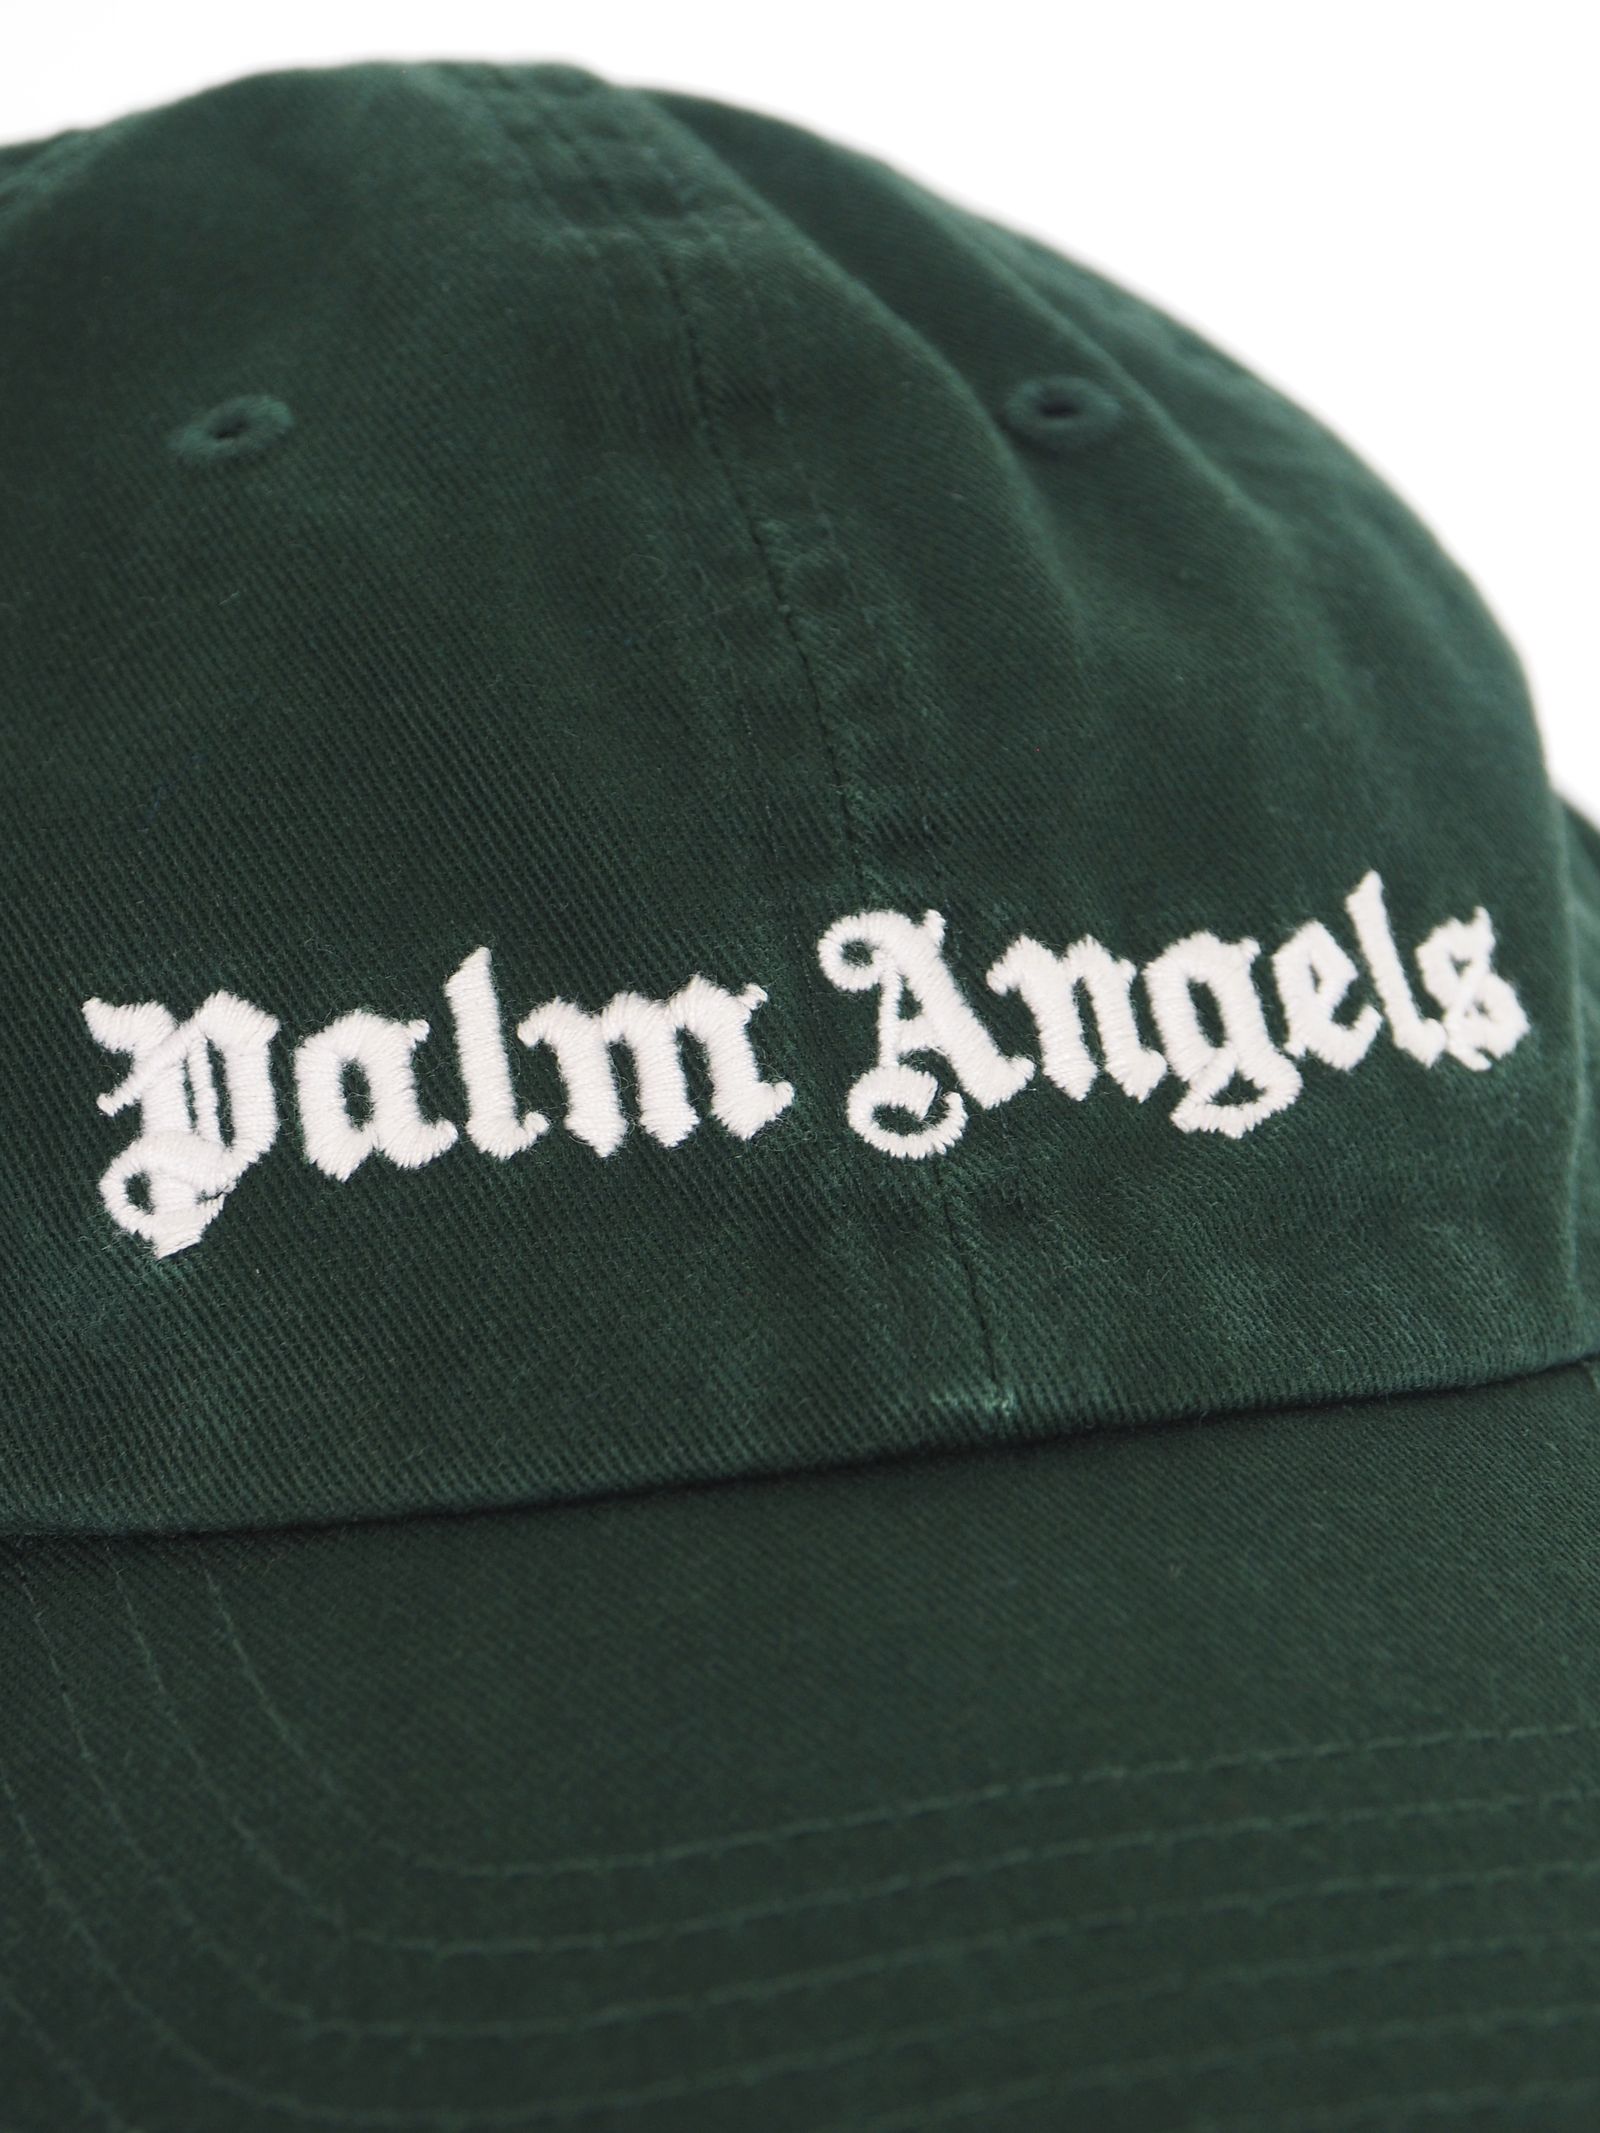 PALM ANGELS - クラシックロゴ キャップ / CLASSIC LOGO CAP / ダーク 